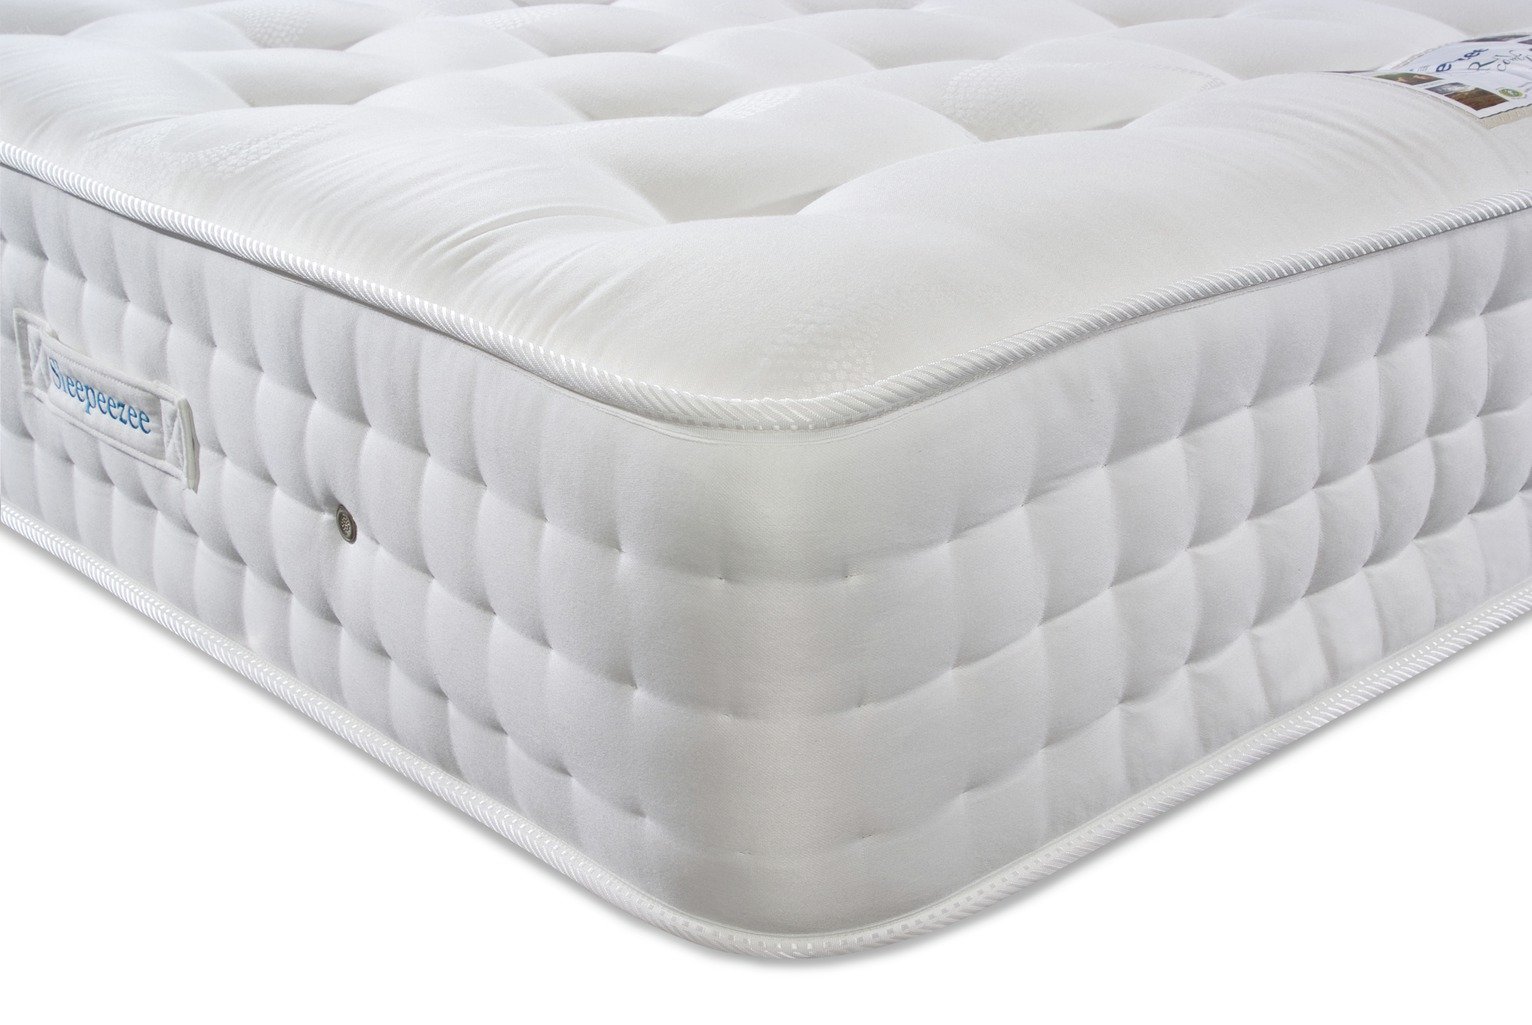 sleepeezee slumberzone mattress reviews